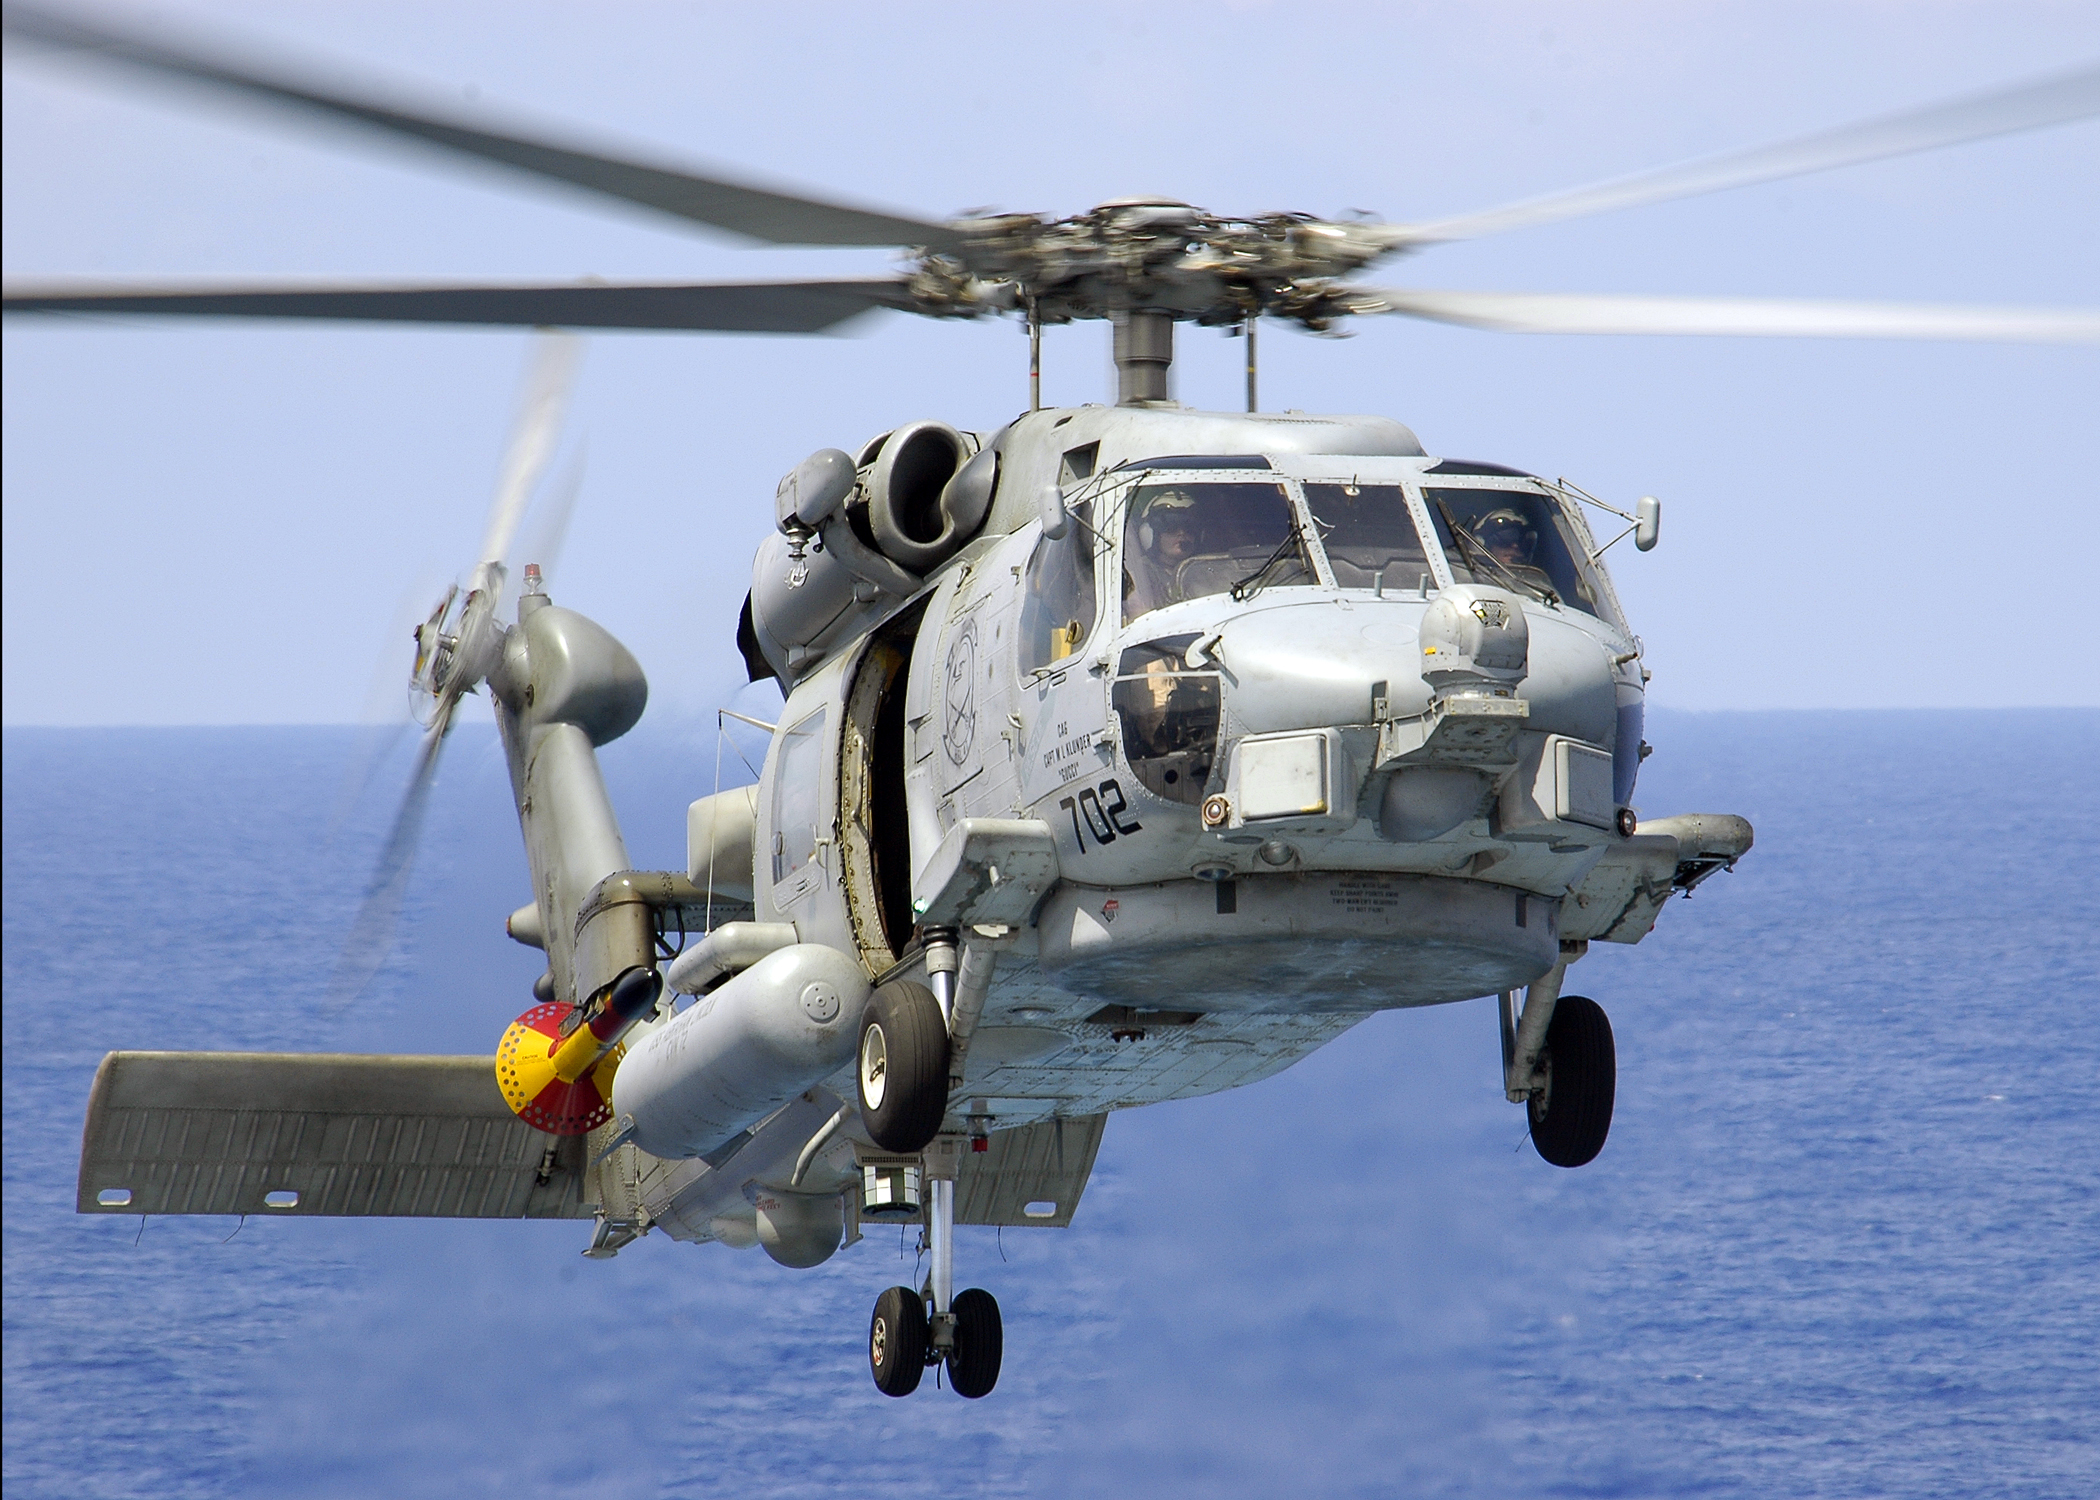 Sikorsky SH-60 Seahawk - Wikipedia